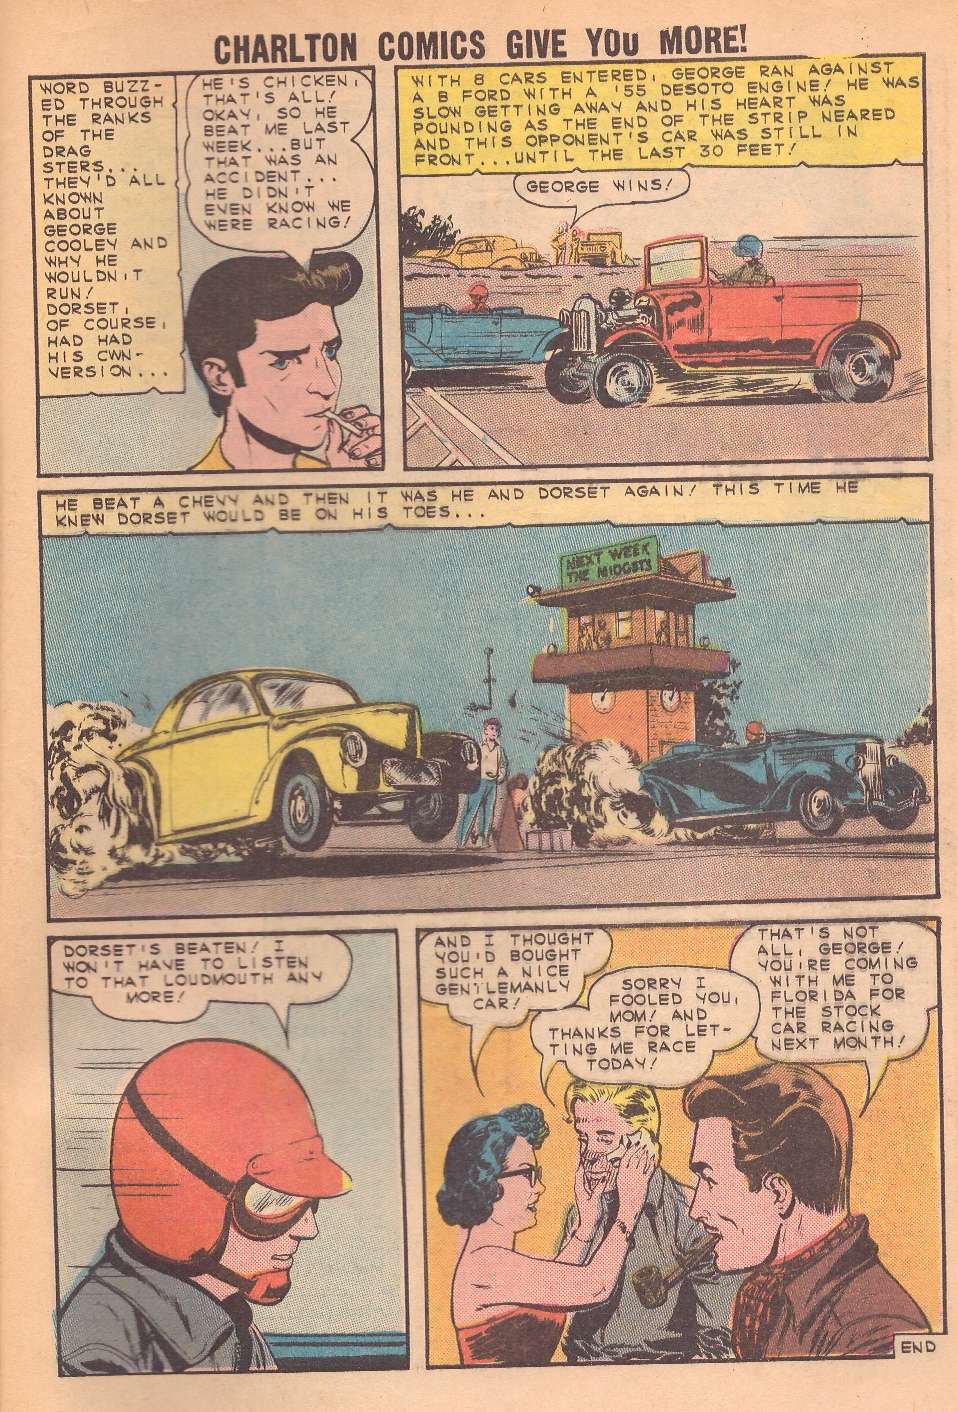 Drag-Strip Hotrodders - 60s Us Comics - January 1965 - Page 2 13206810